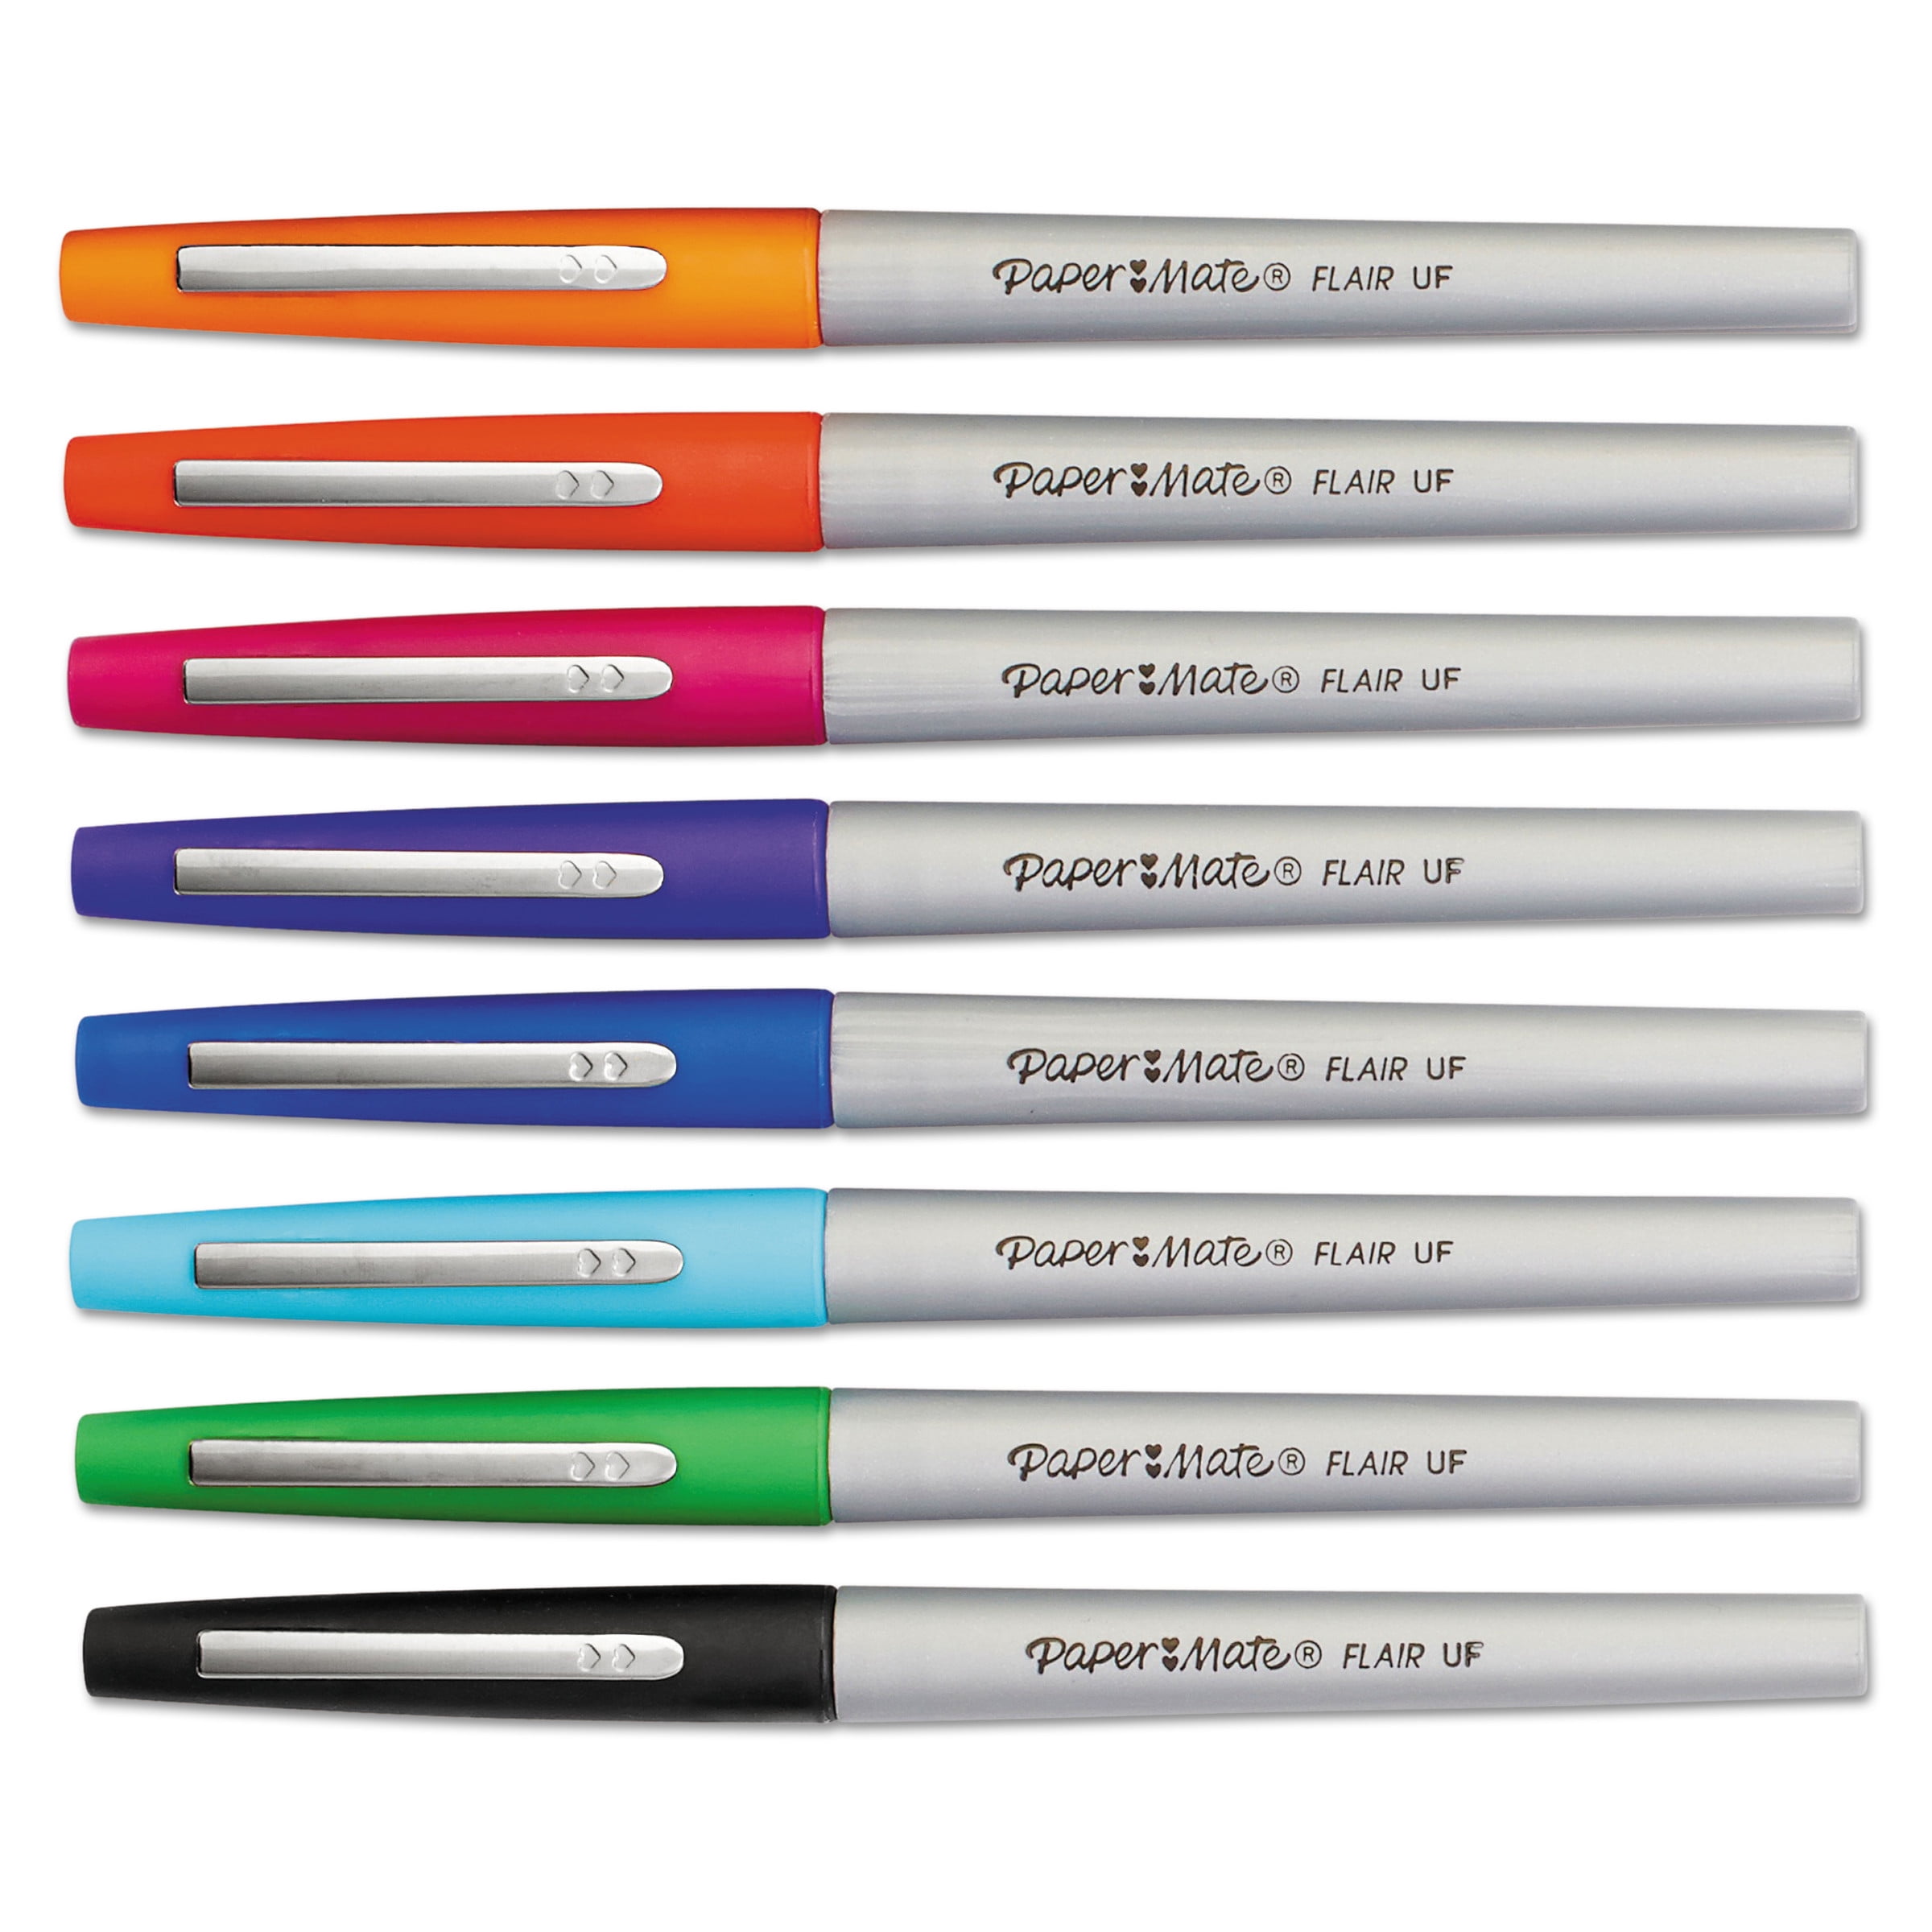 Paper Mate Liquid Flair Porous Point Pen - LD Products